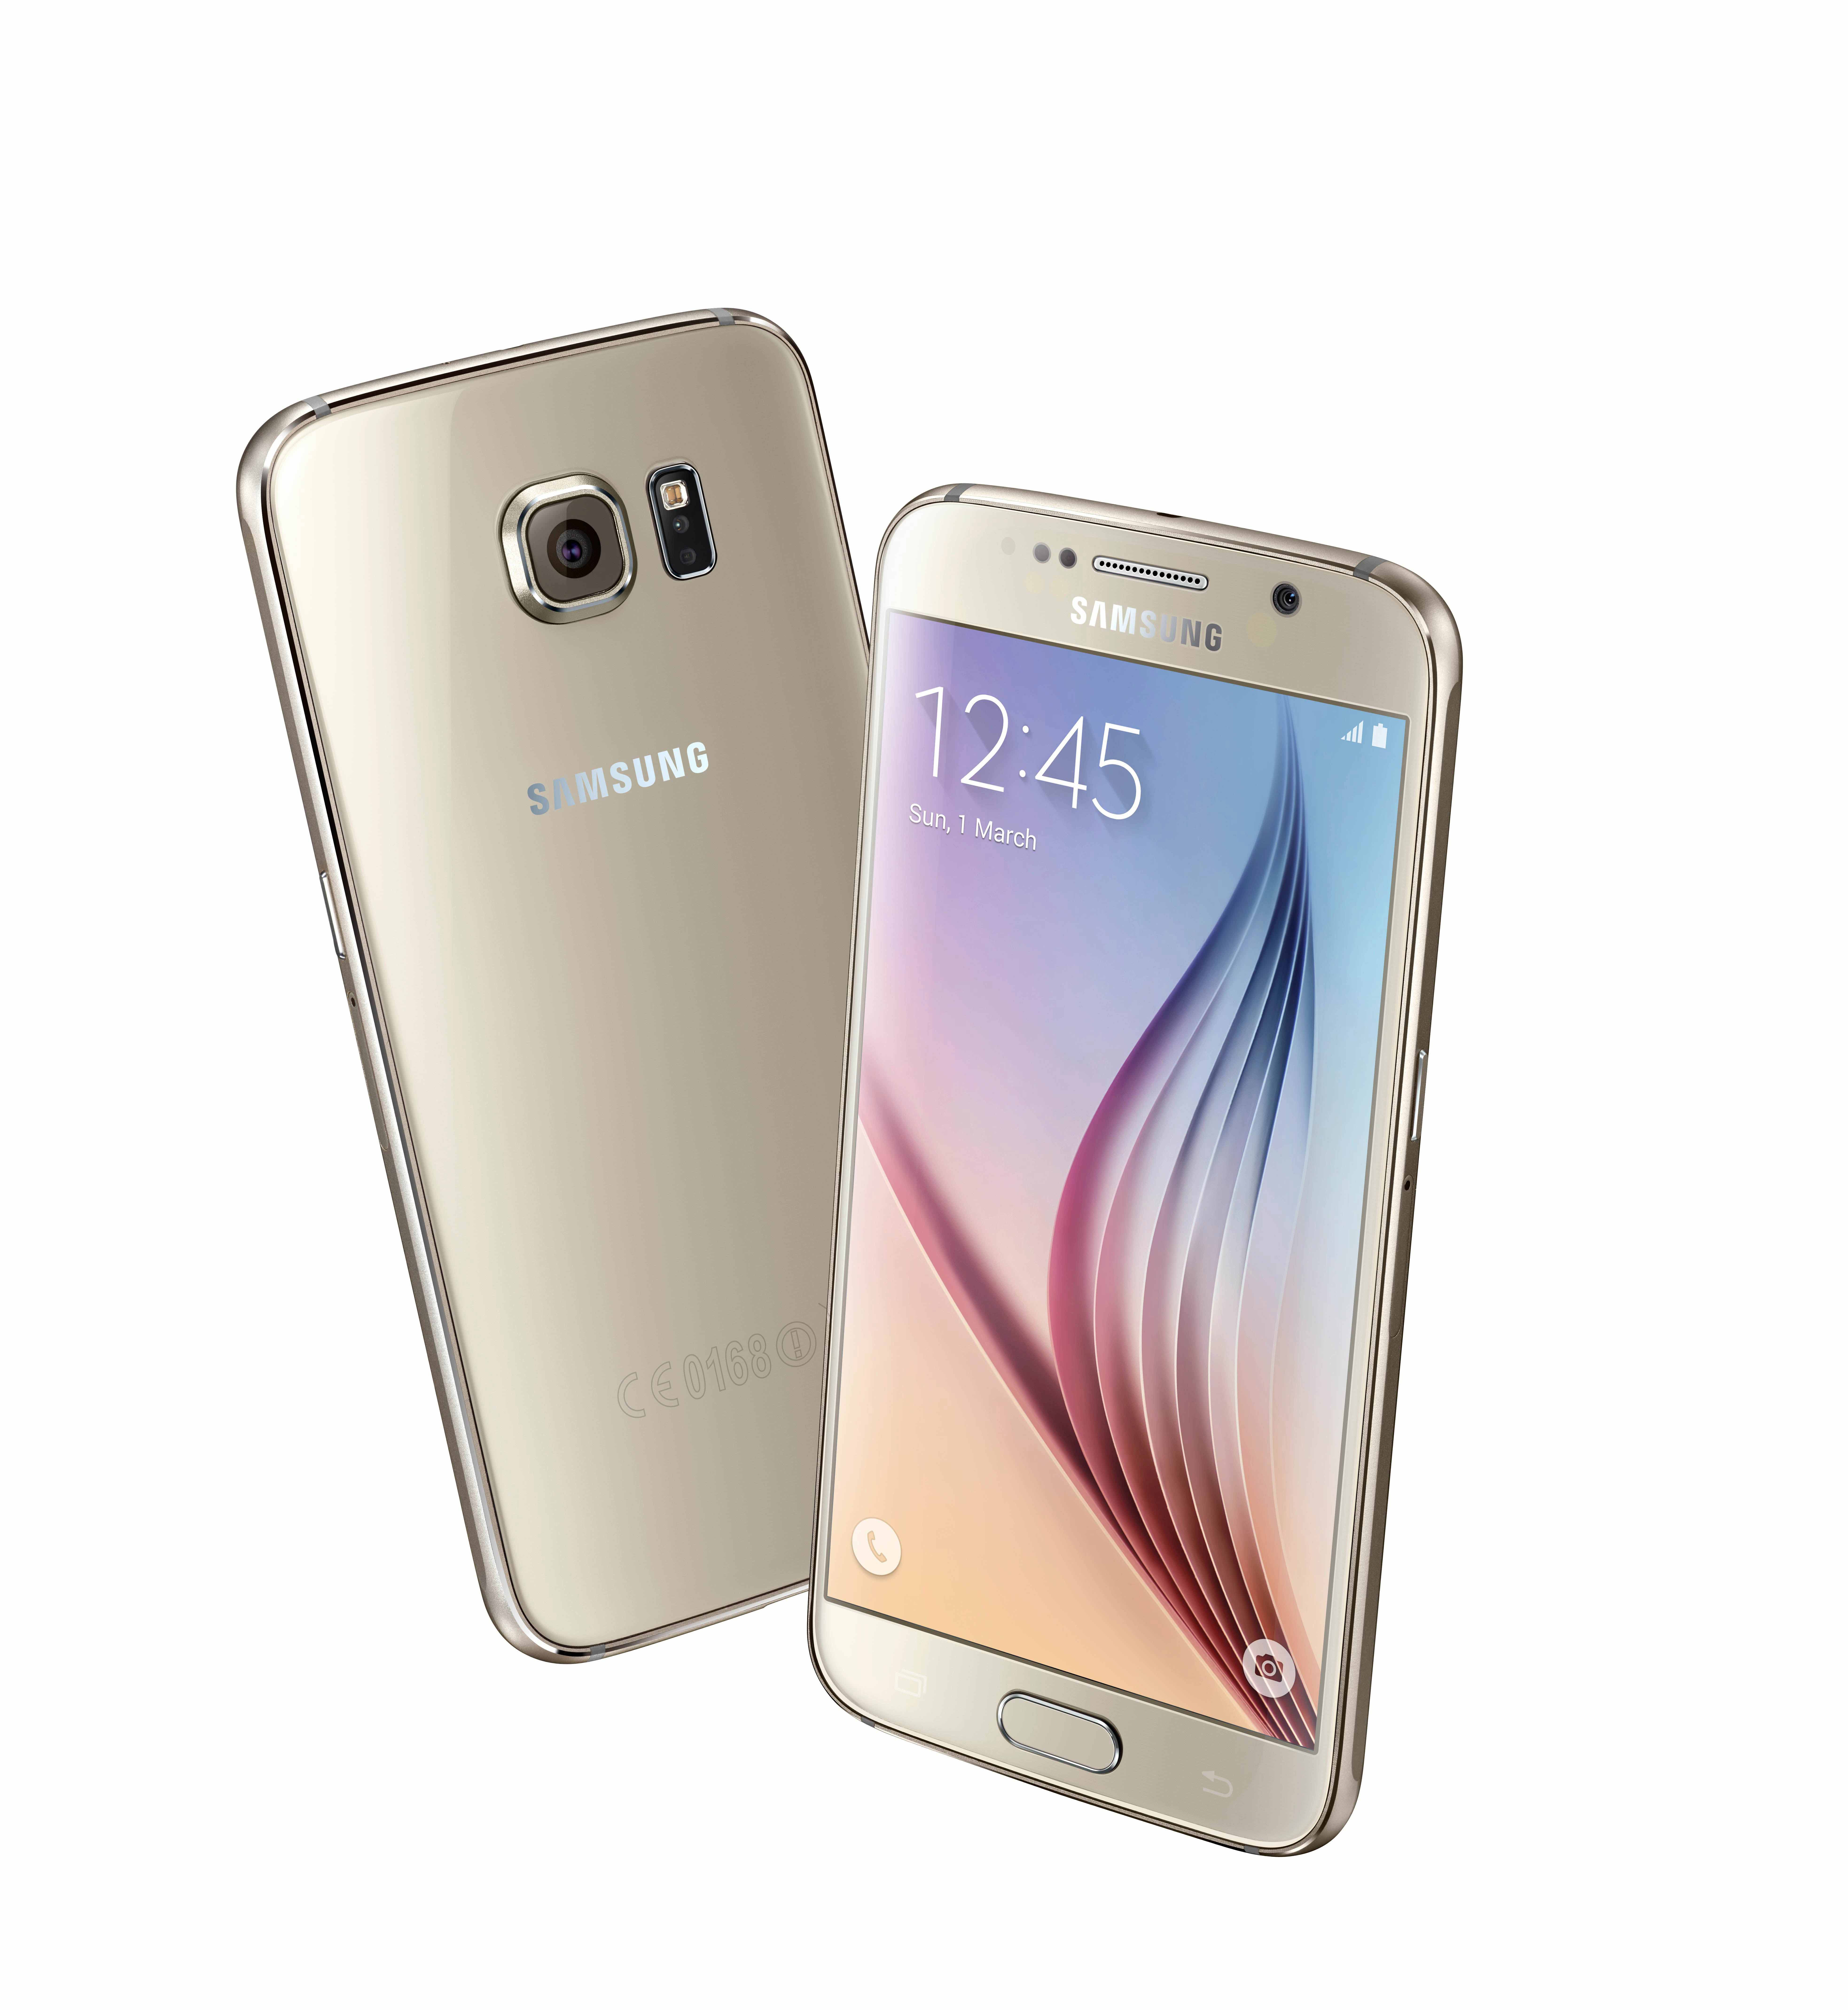 band Onderdrukker Lezen Samsung Galaxy S6 Smartphone Review - NotebookCheck.net Reviews